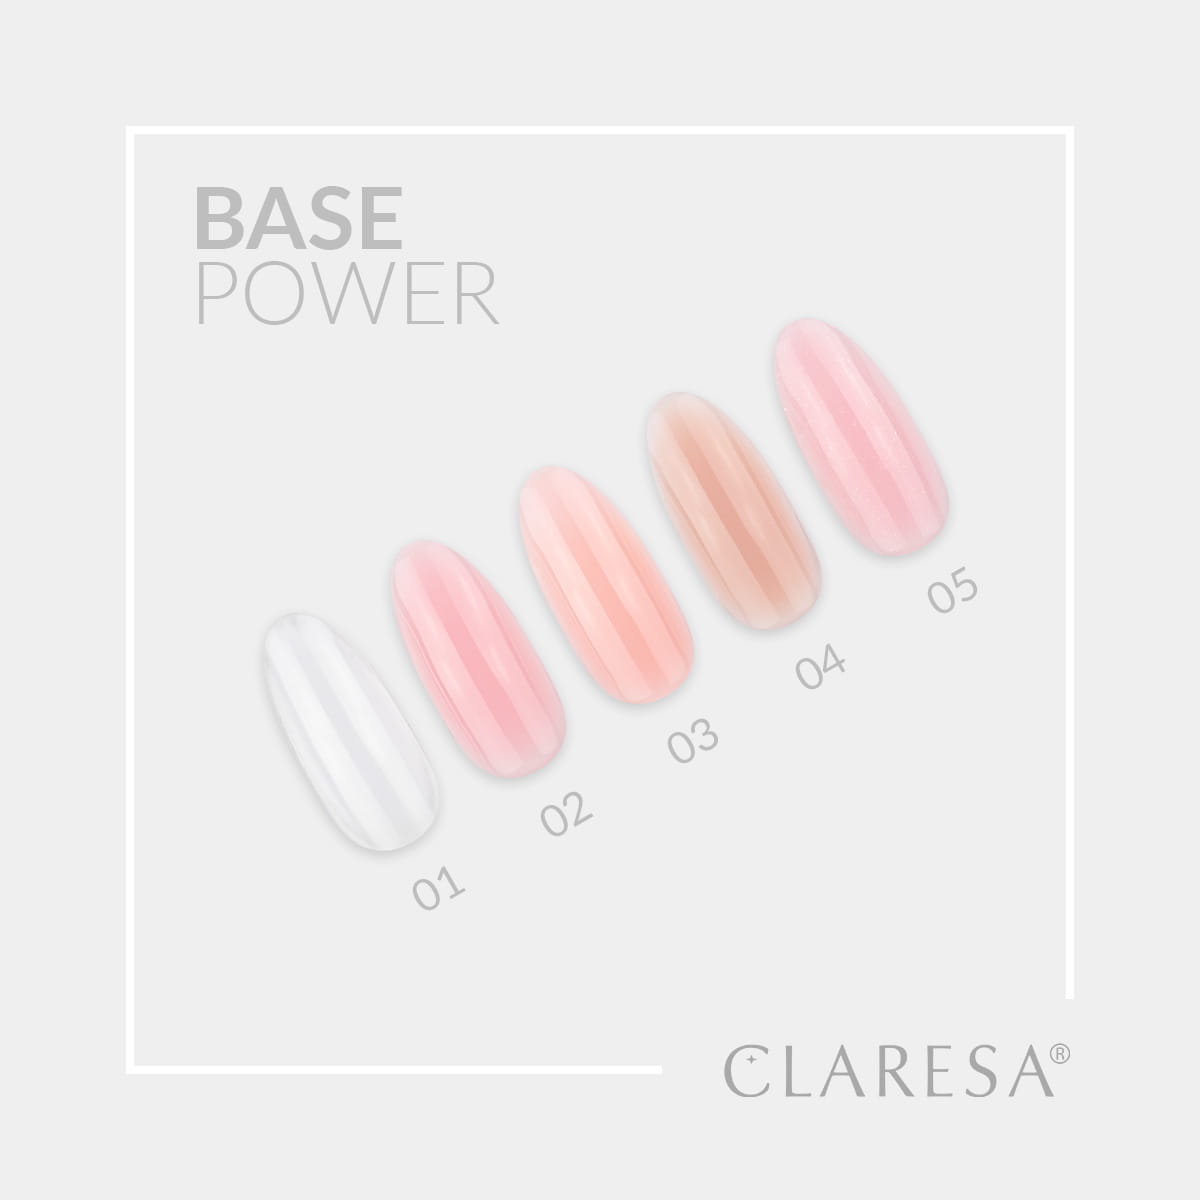 Claresa-BASE-POWER_tips.jpg